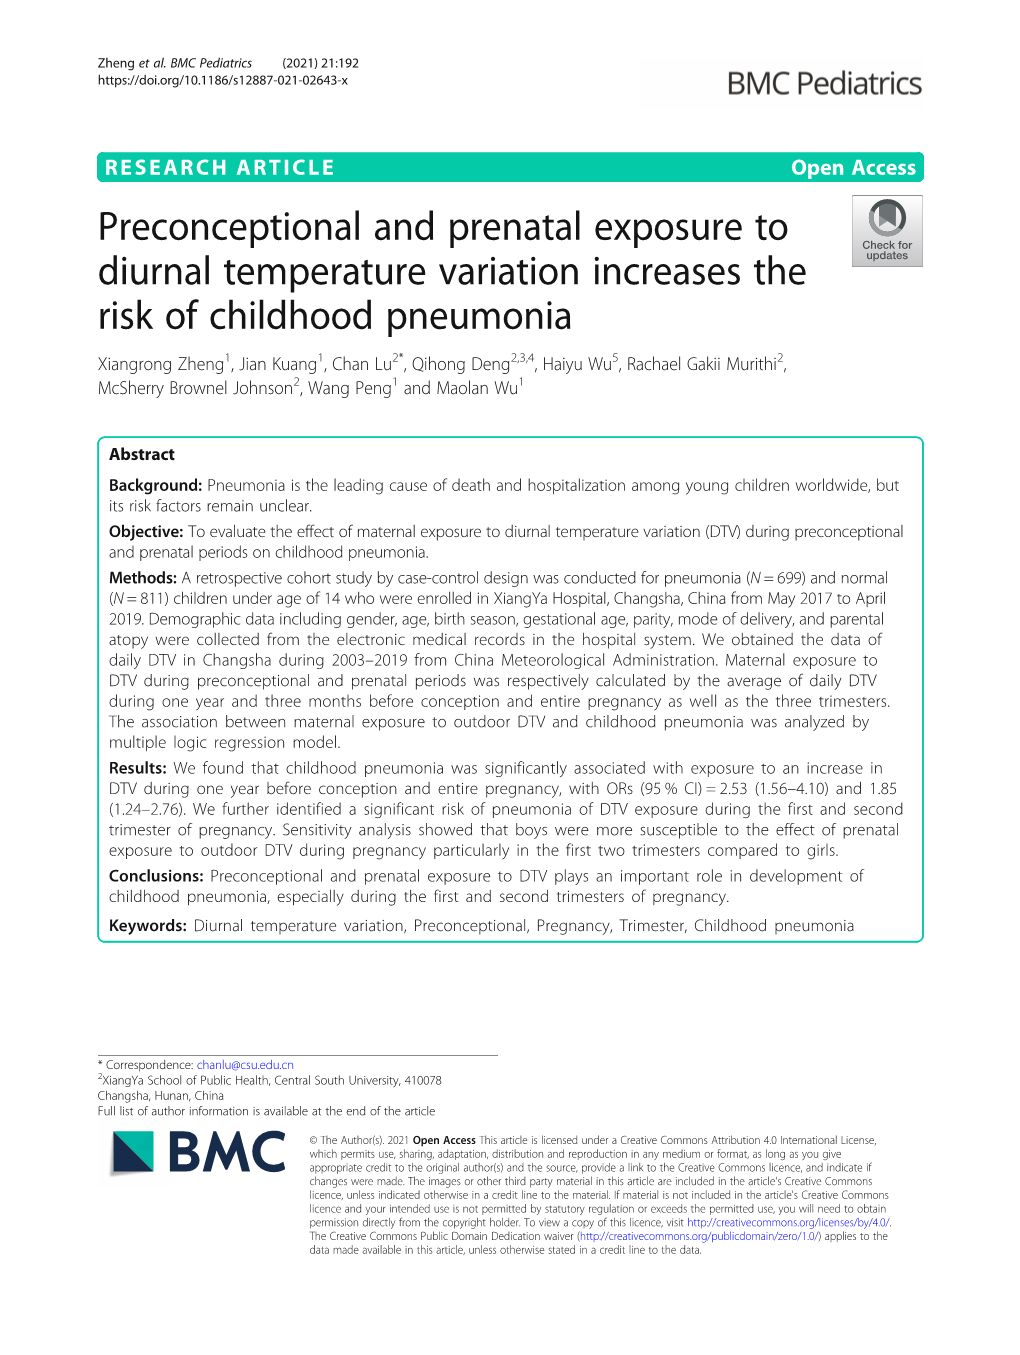 Preconceptional and Prenatal Exposure To